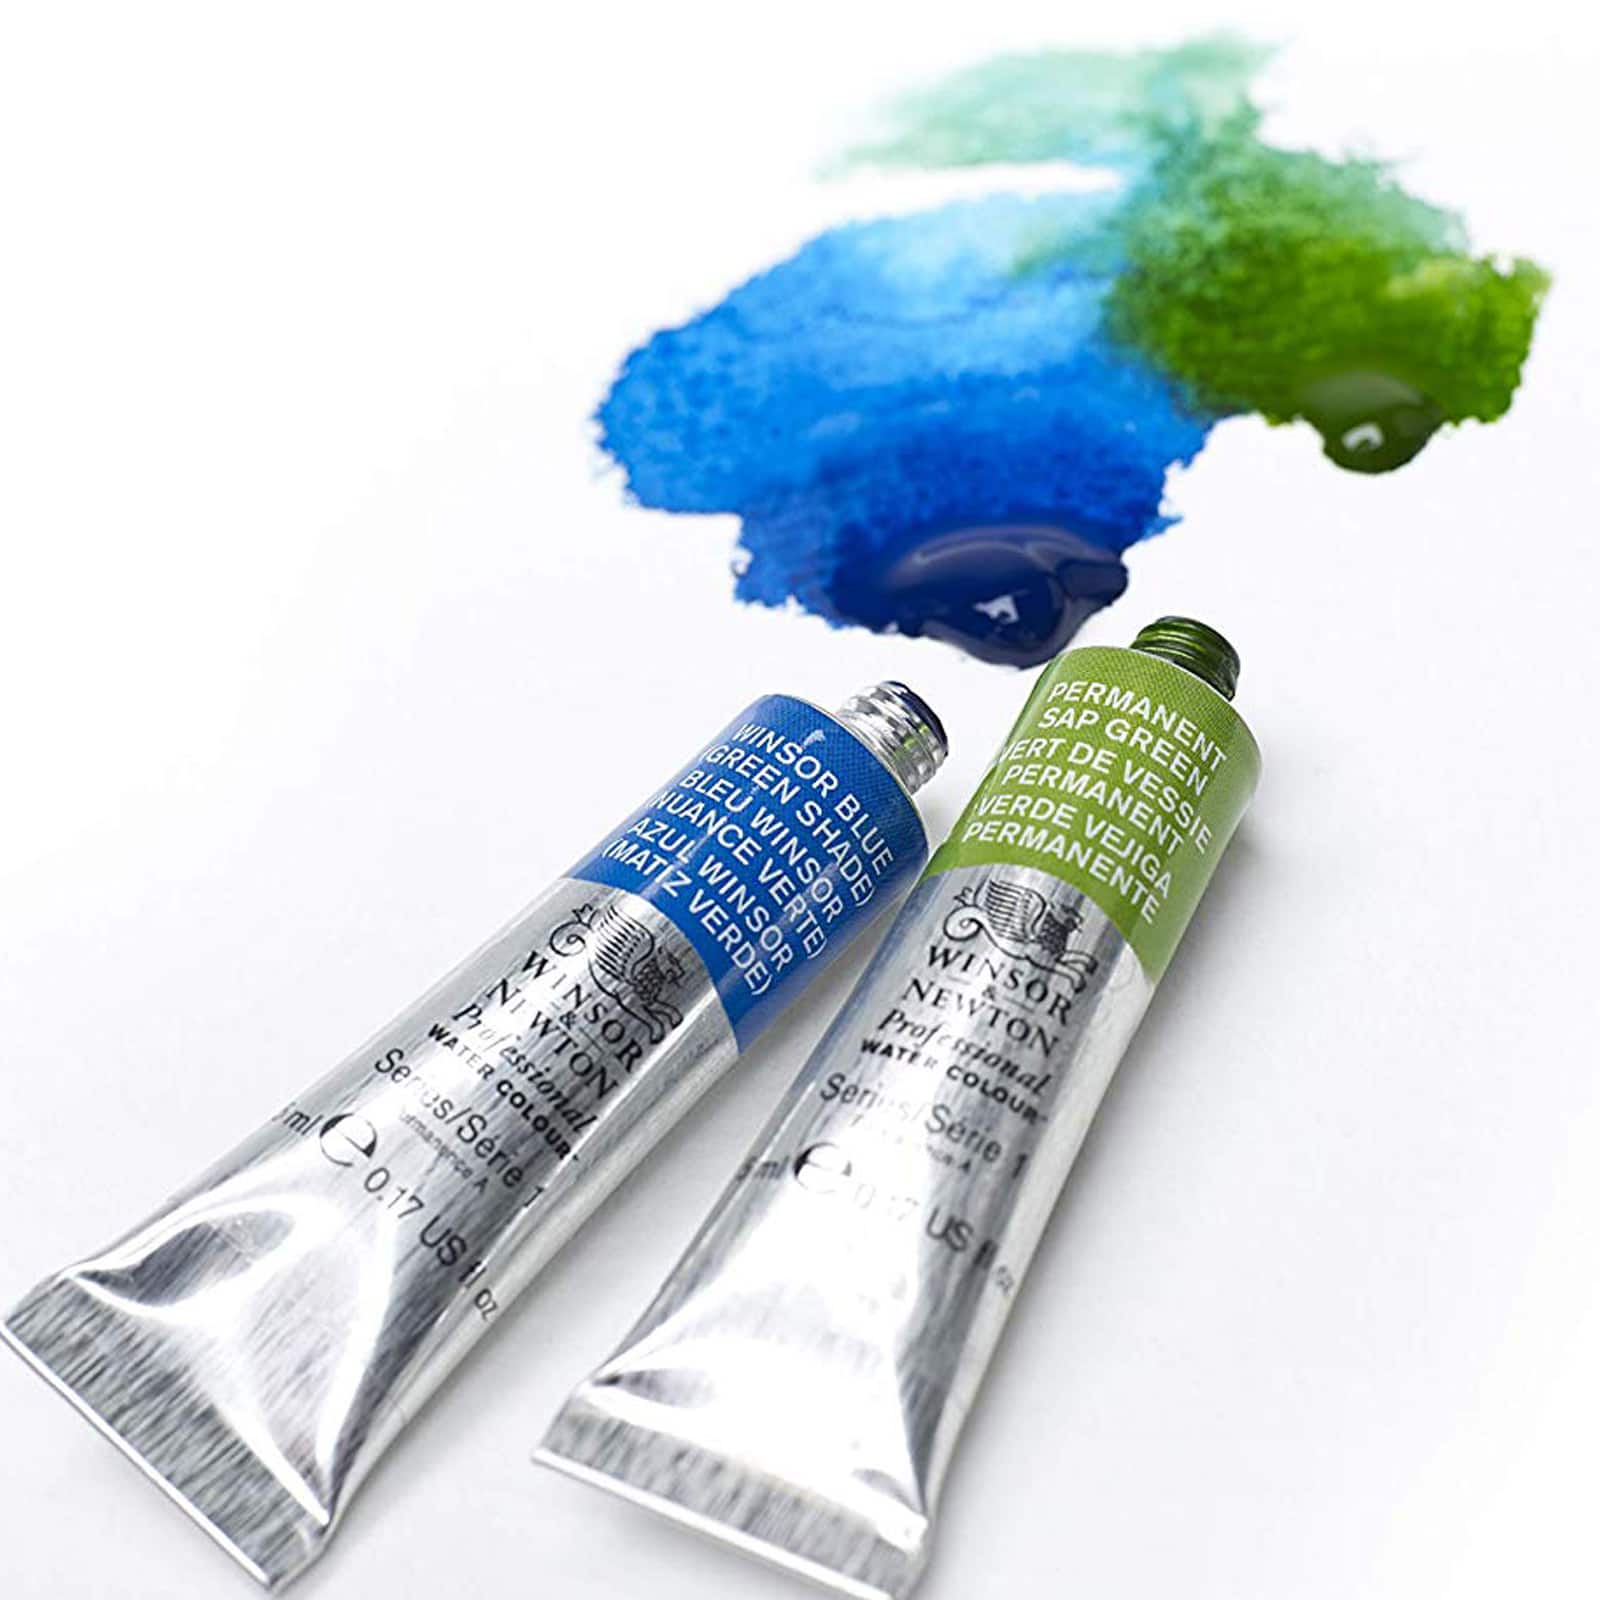 Winsor &#x26; Newton&#xAE; Professional Water Colour&#x2122; Paint Tube, 14mL